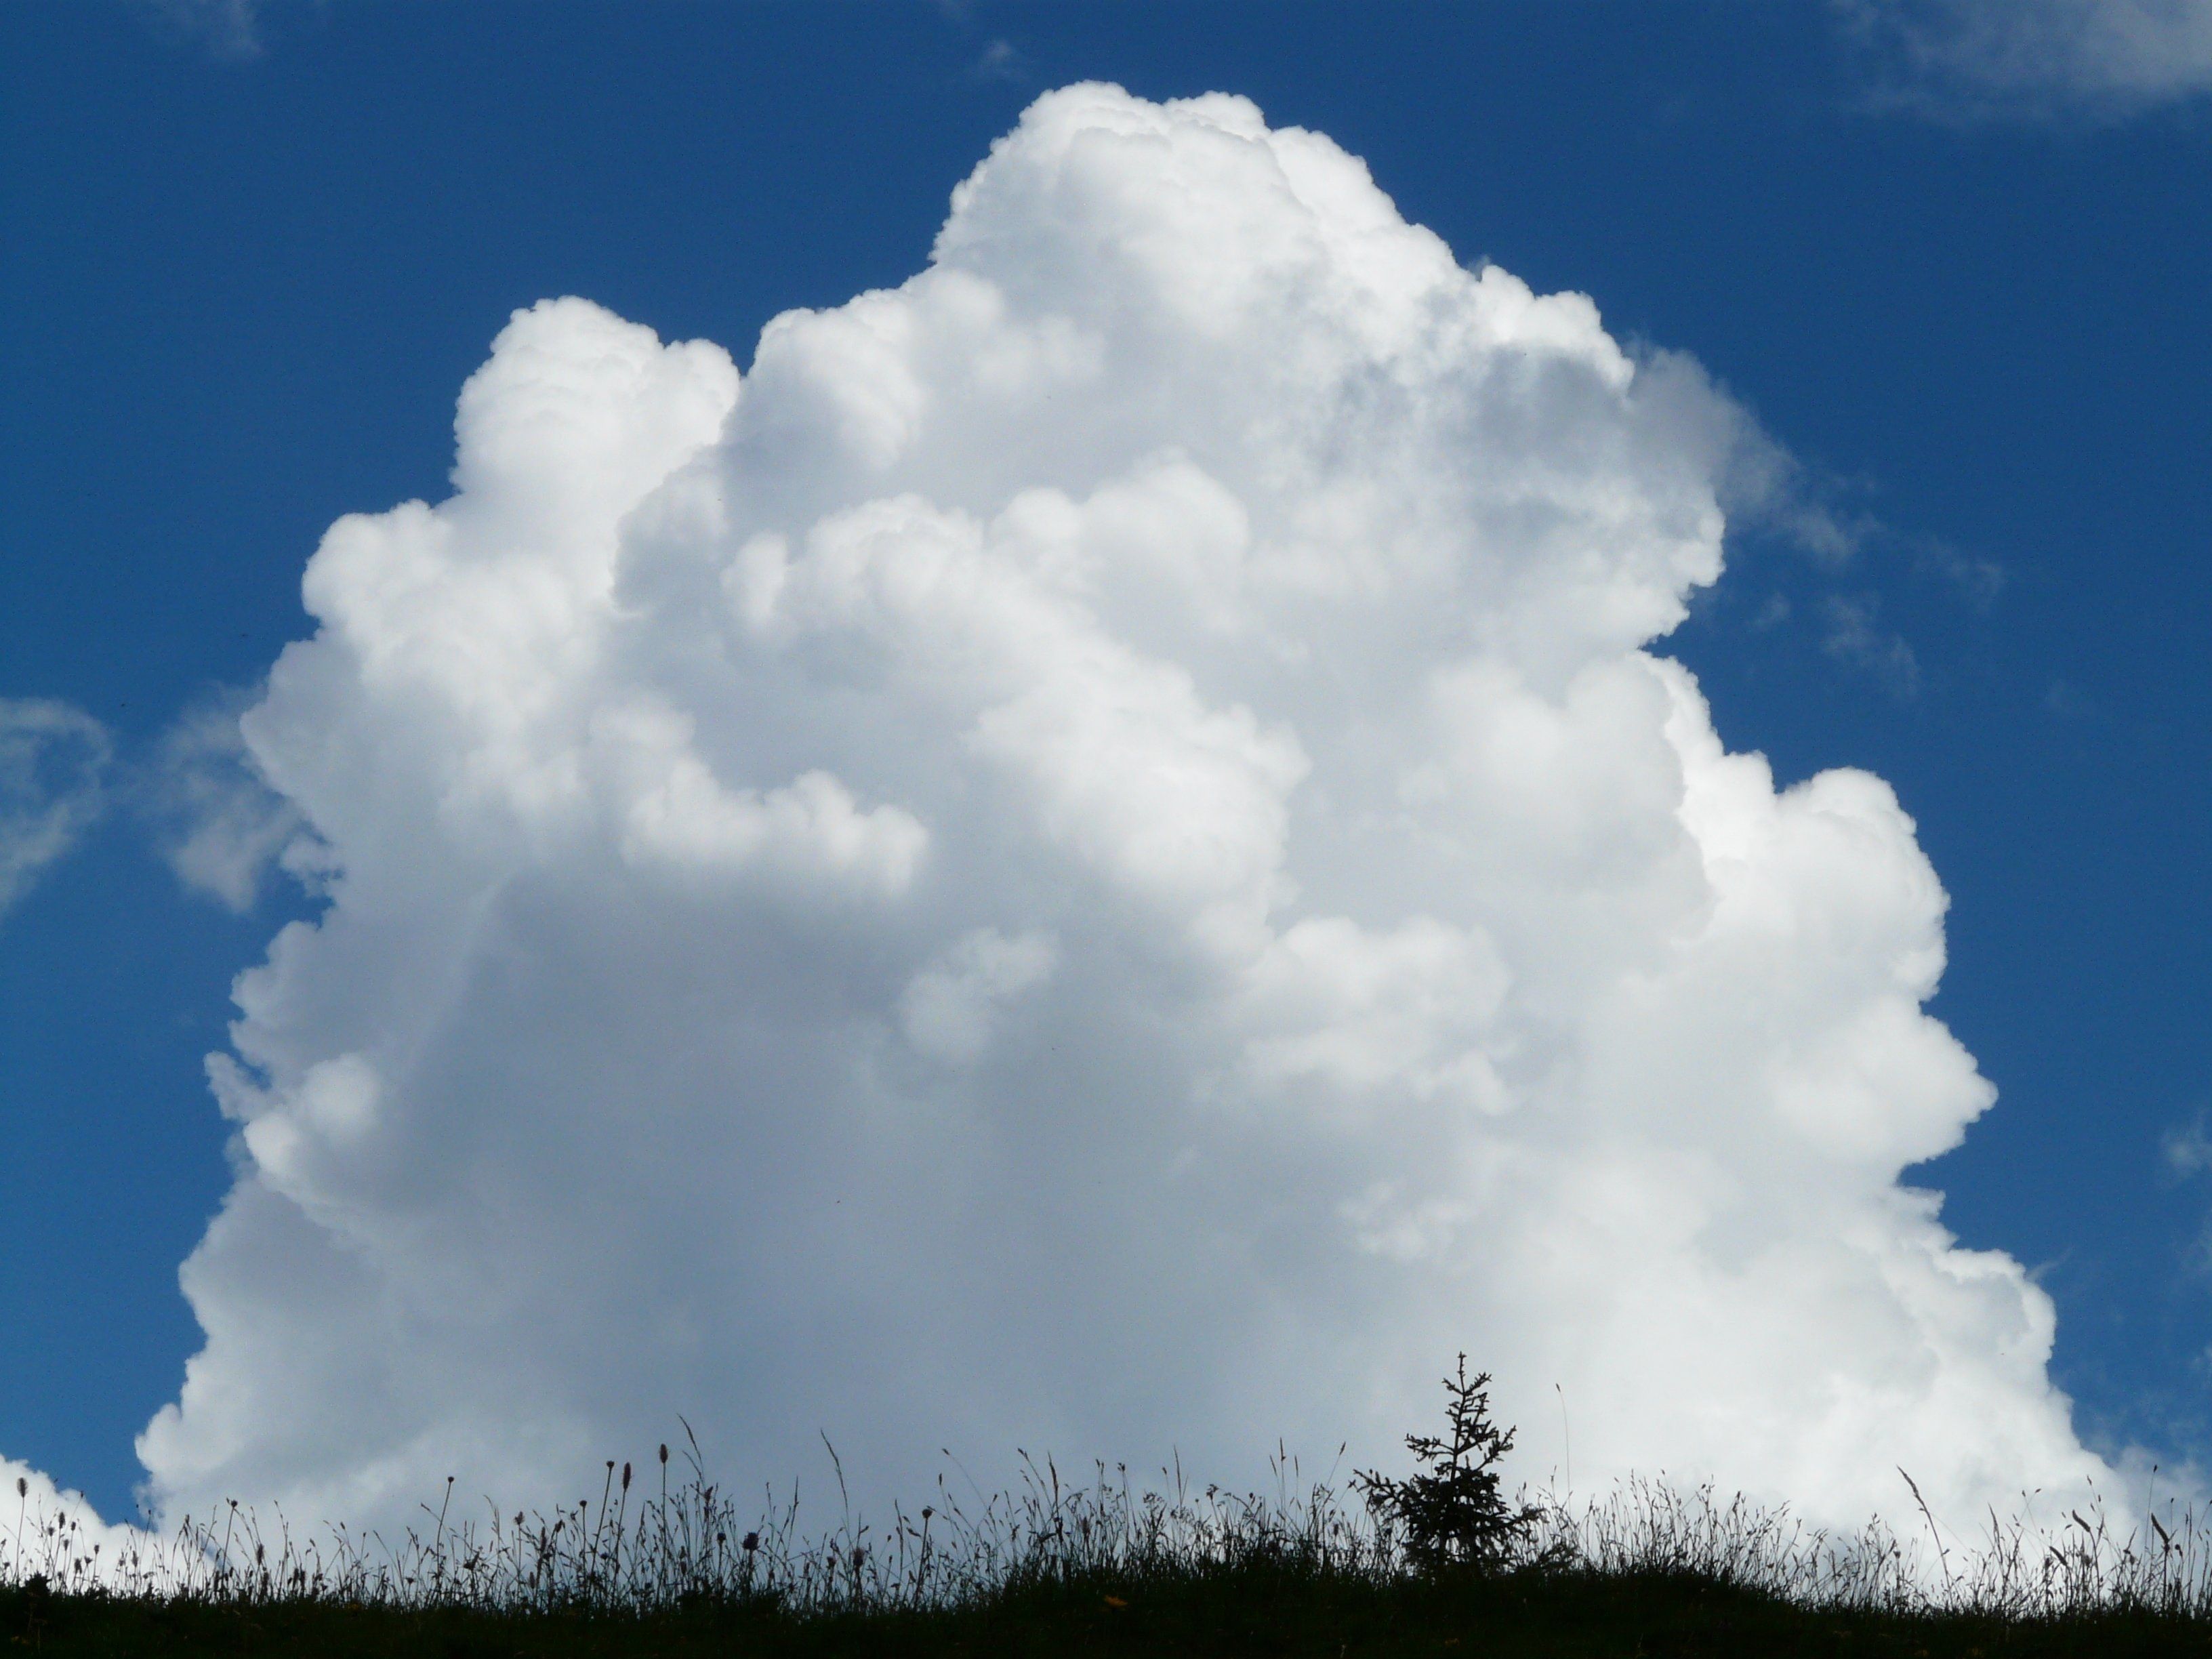 cloud #cumulus clouds #cumulus #thunderstorm #sky #blue wallpaper and background